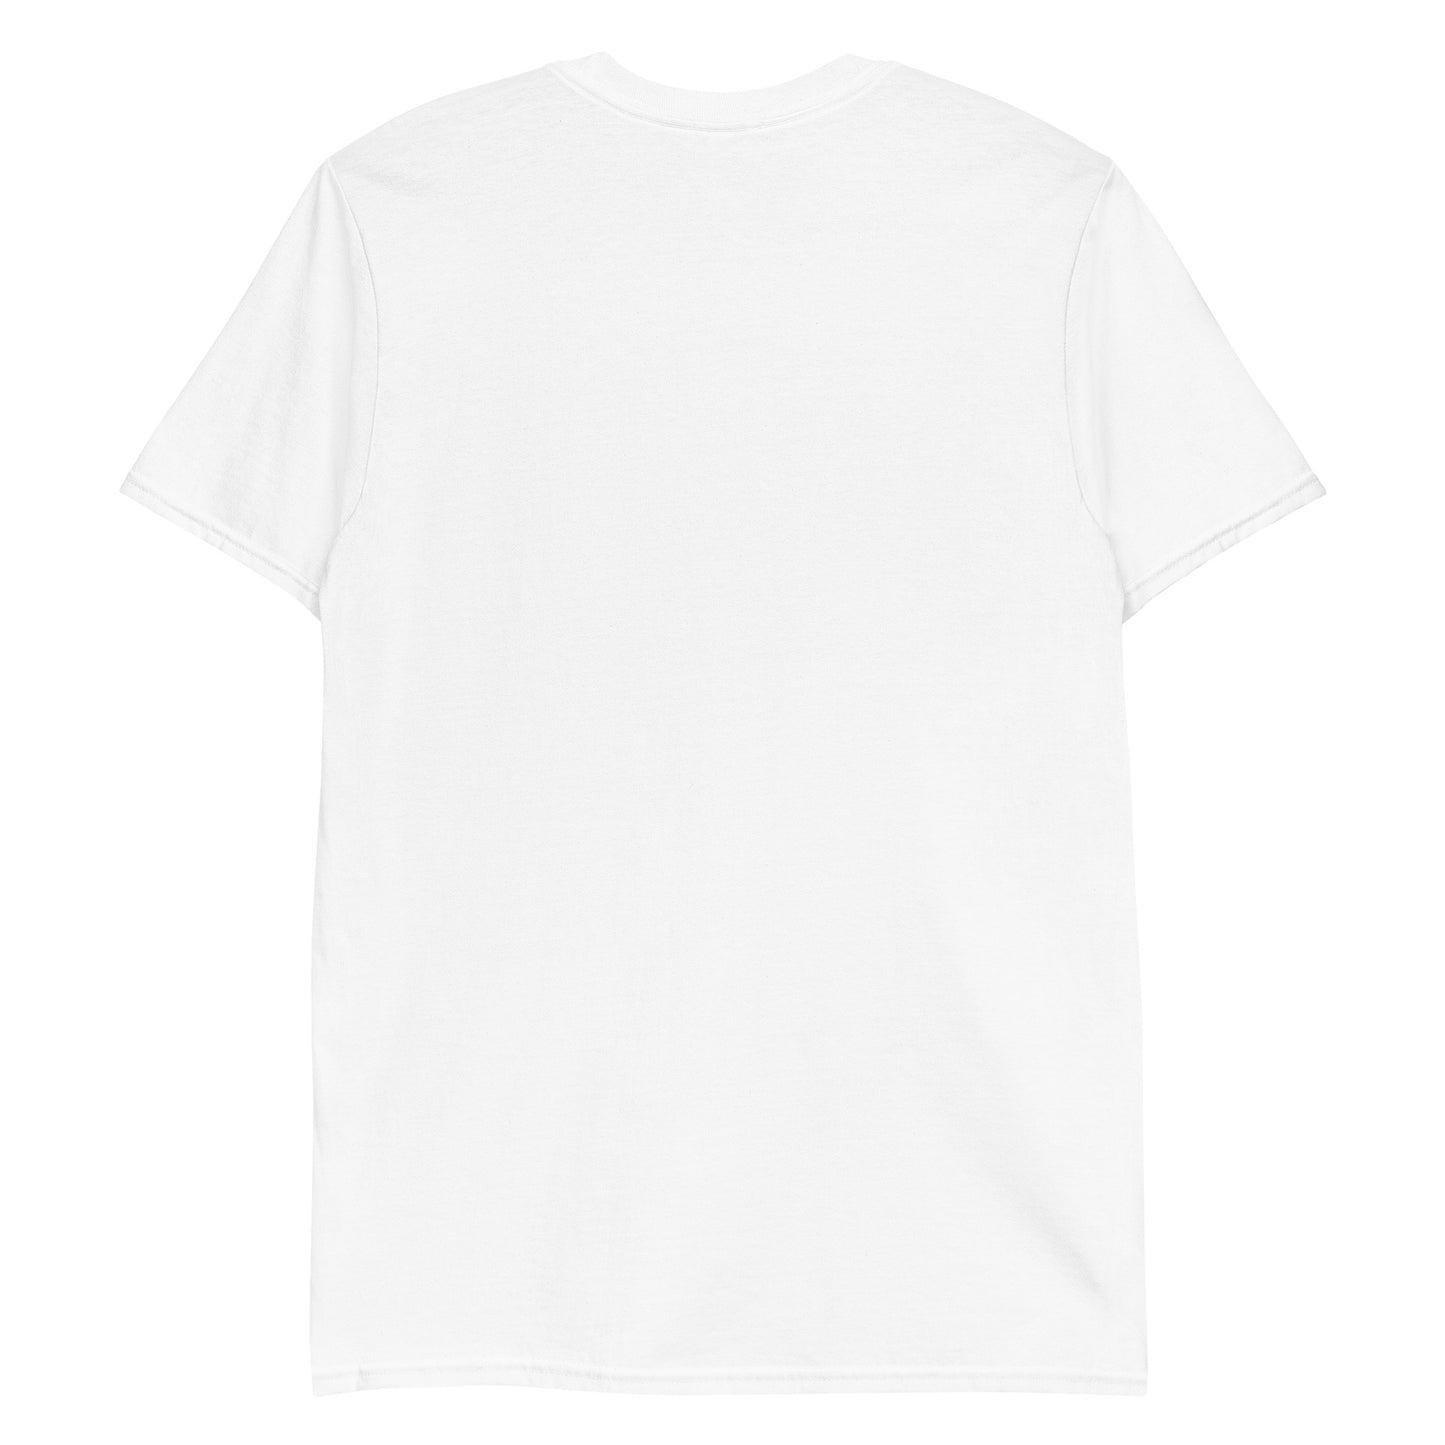 KUMASI Short-Sleeve Unisex T-Shirt